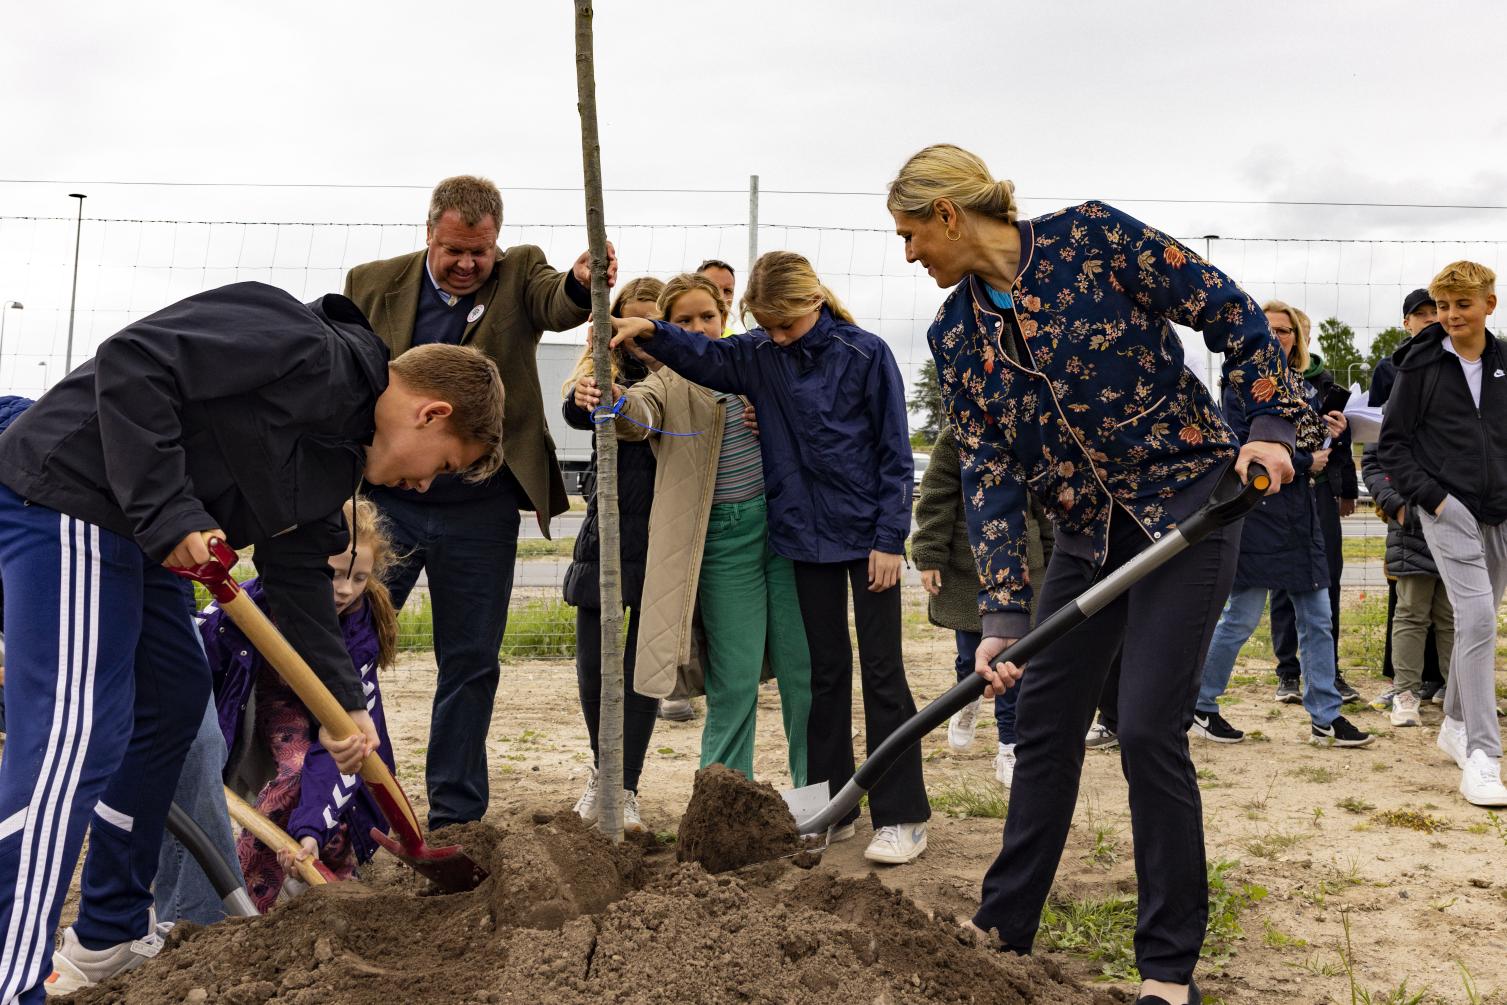 140 massevis træer ny skoleskov på Fyn | Vejdirektoratet